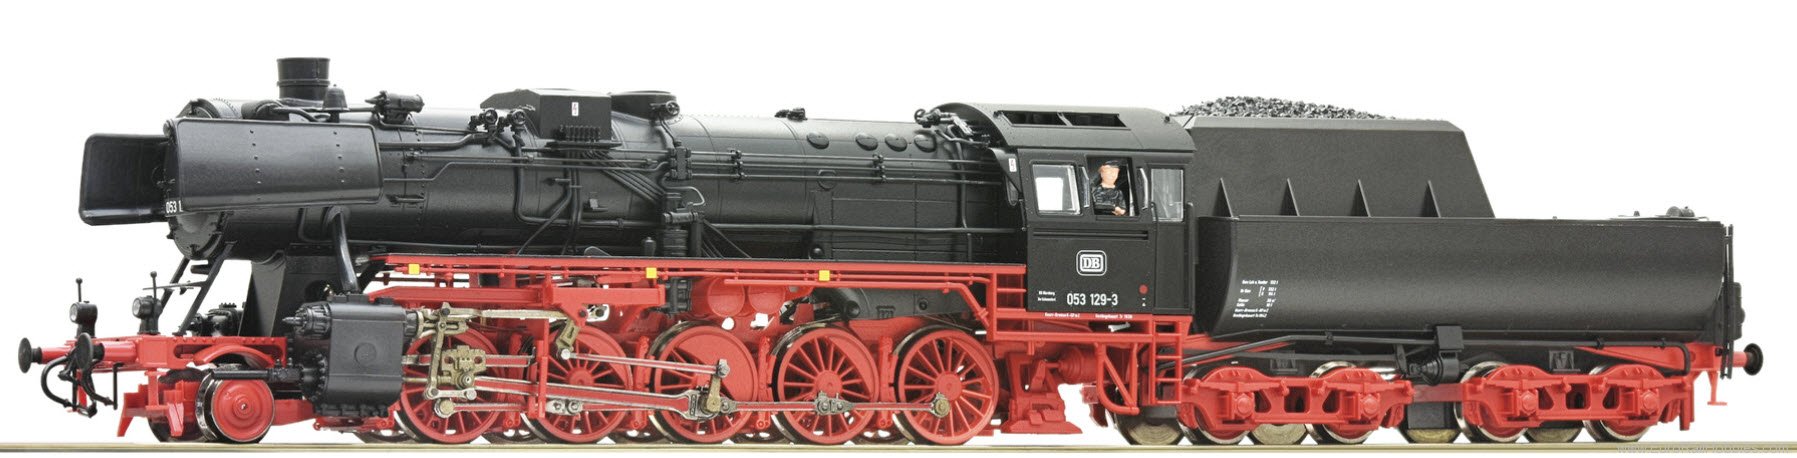 Roco 72140 DB Steam locomotive 053 129-3,